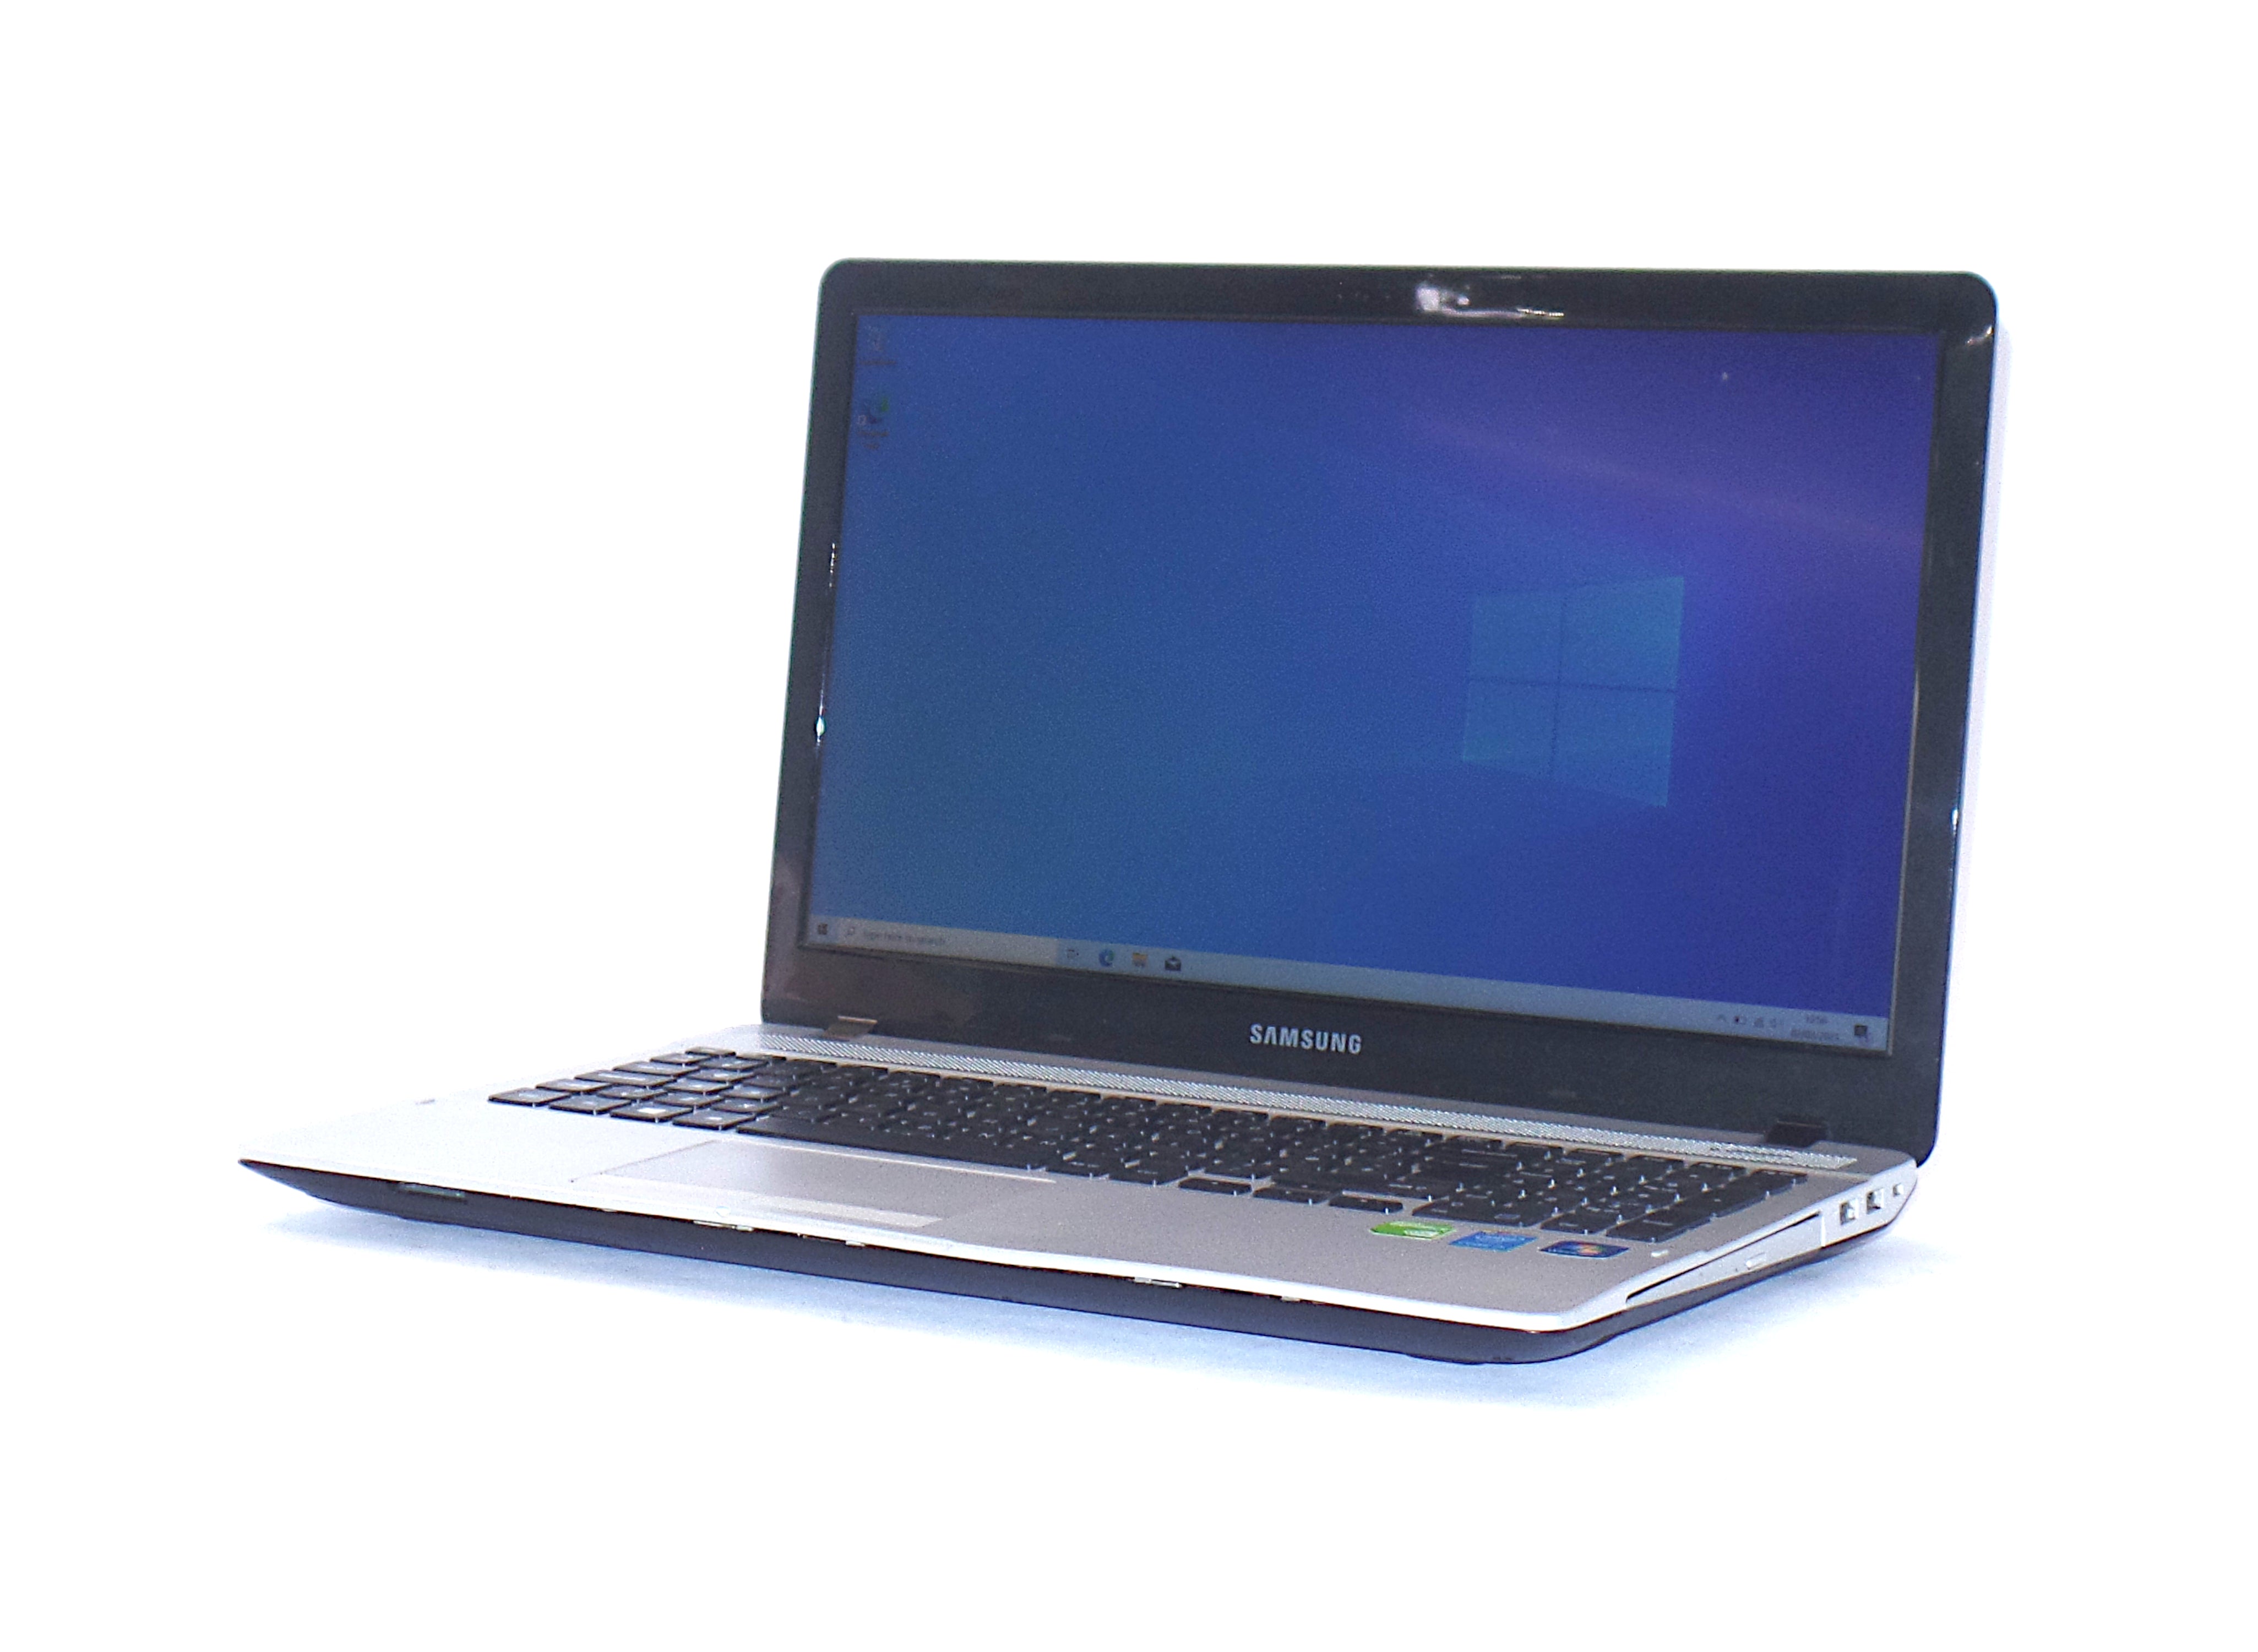 Samsung 370E5J Laptop, 15.6" Core i7 4th Gen, 8GB RAM, 256GB SSD